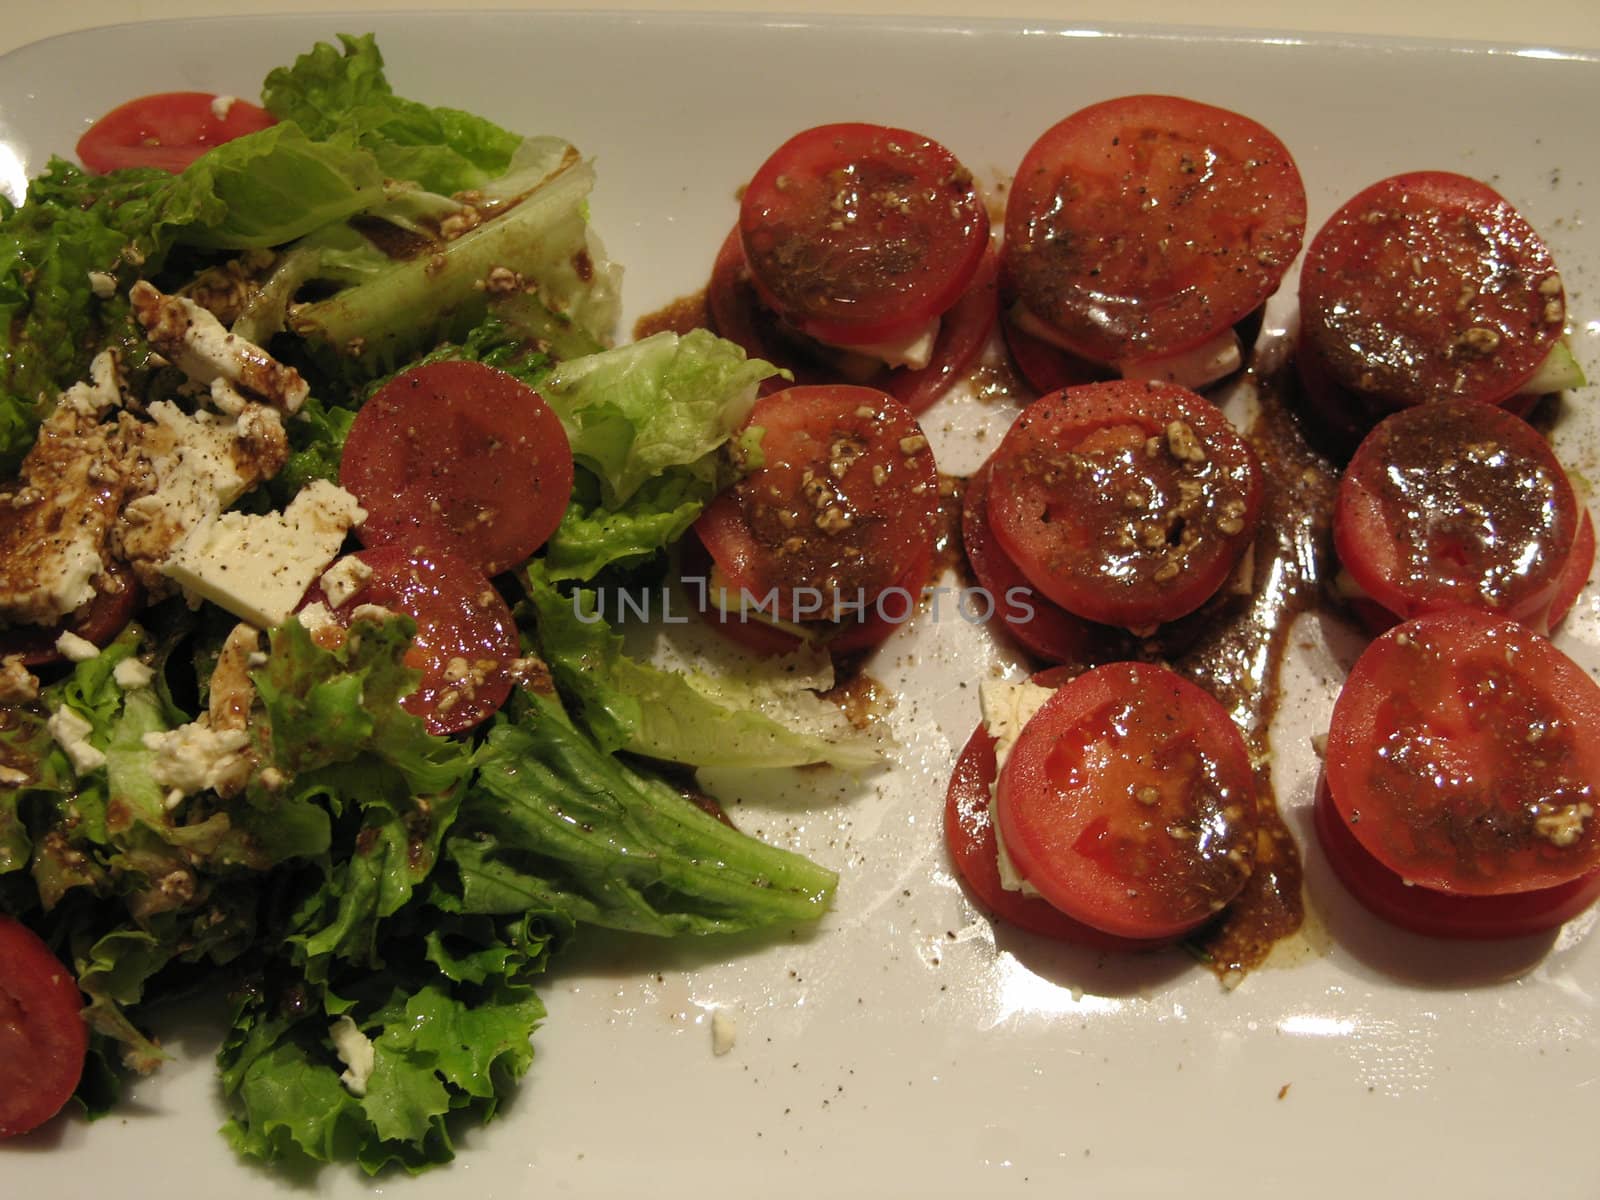 tomato dish and salad